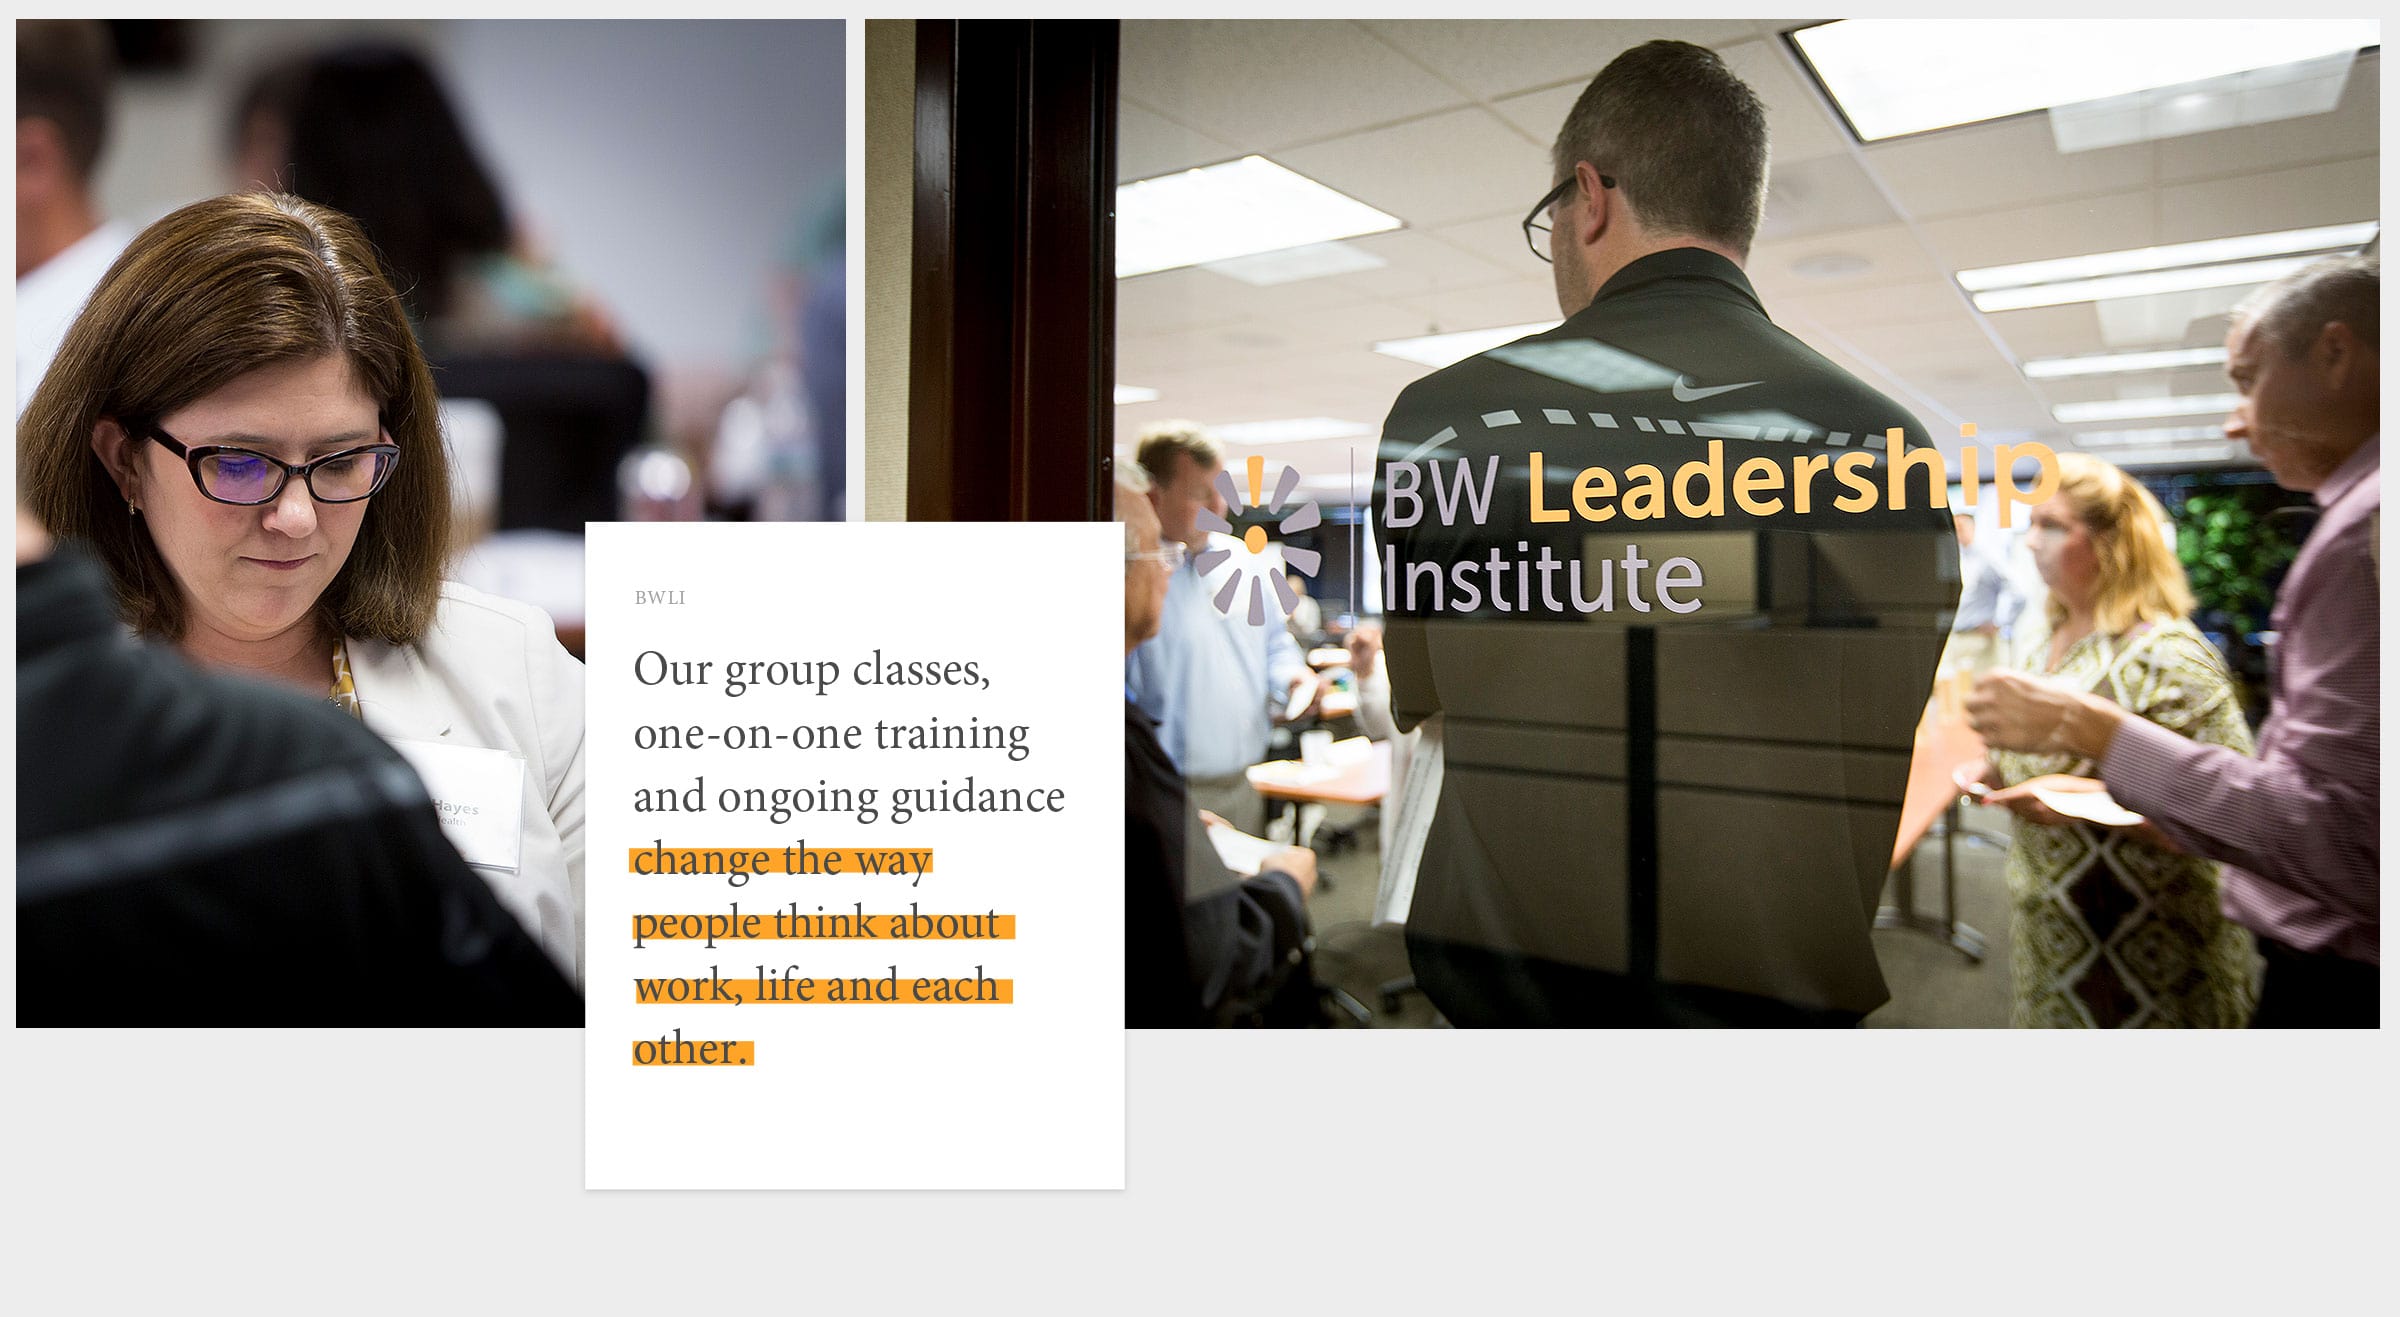 Elements of the Barry Wehmiller Leadership Institute Branding Program